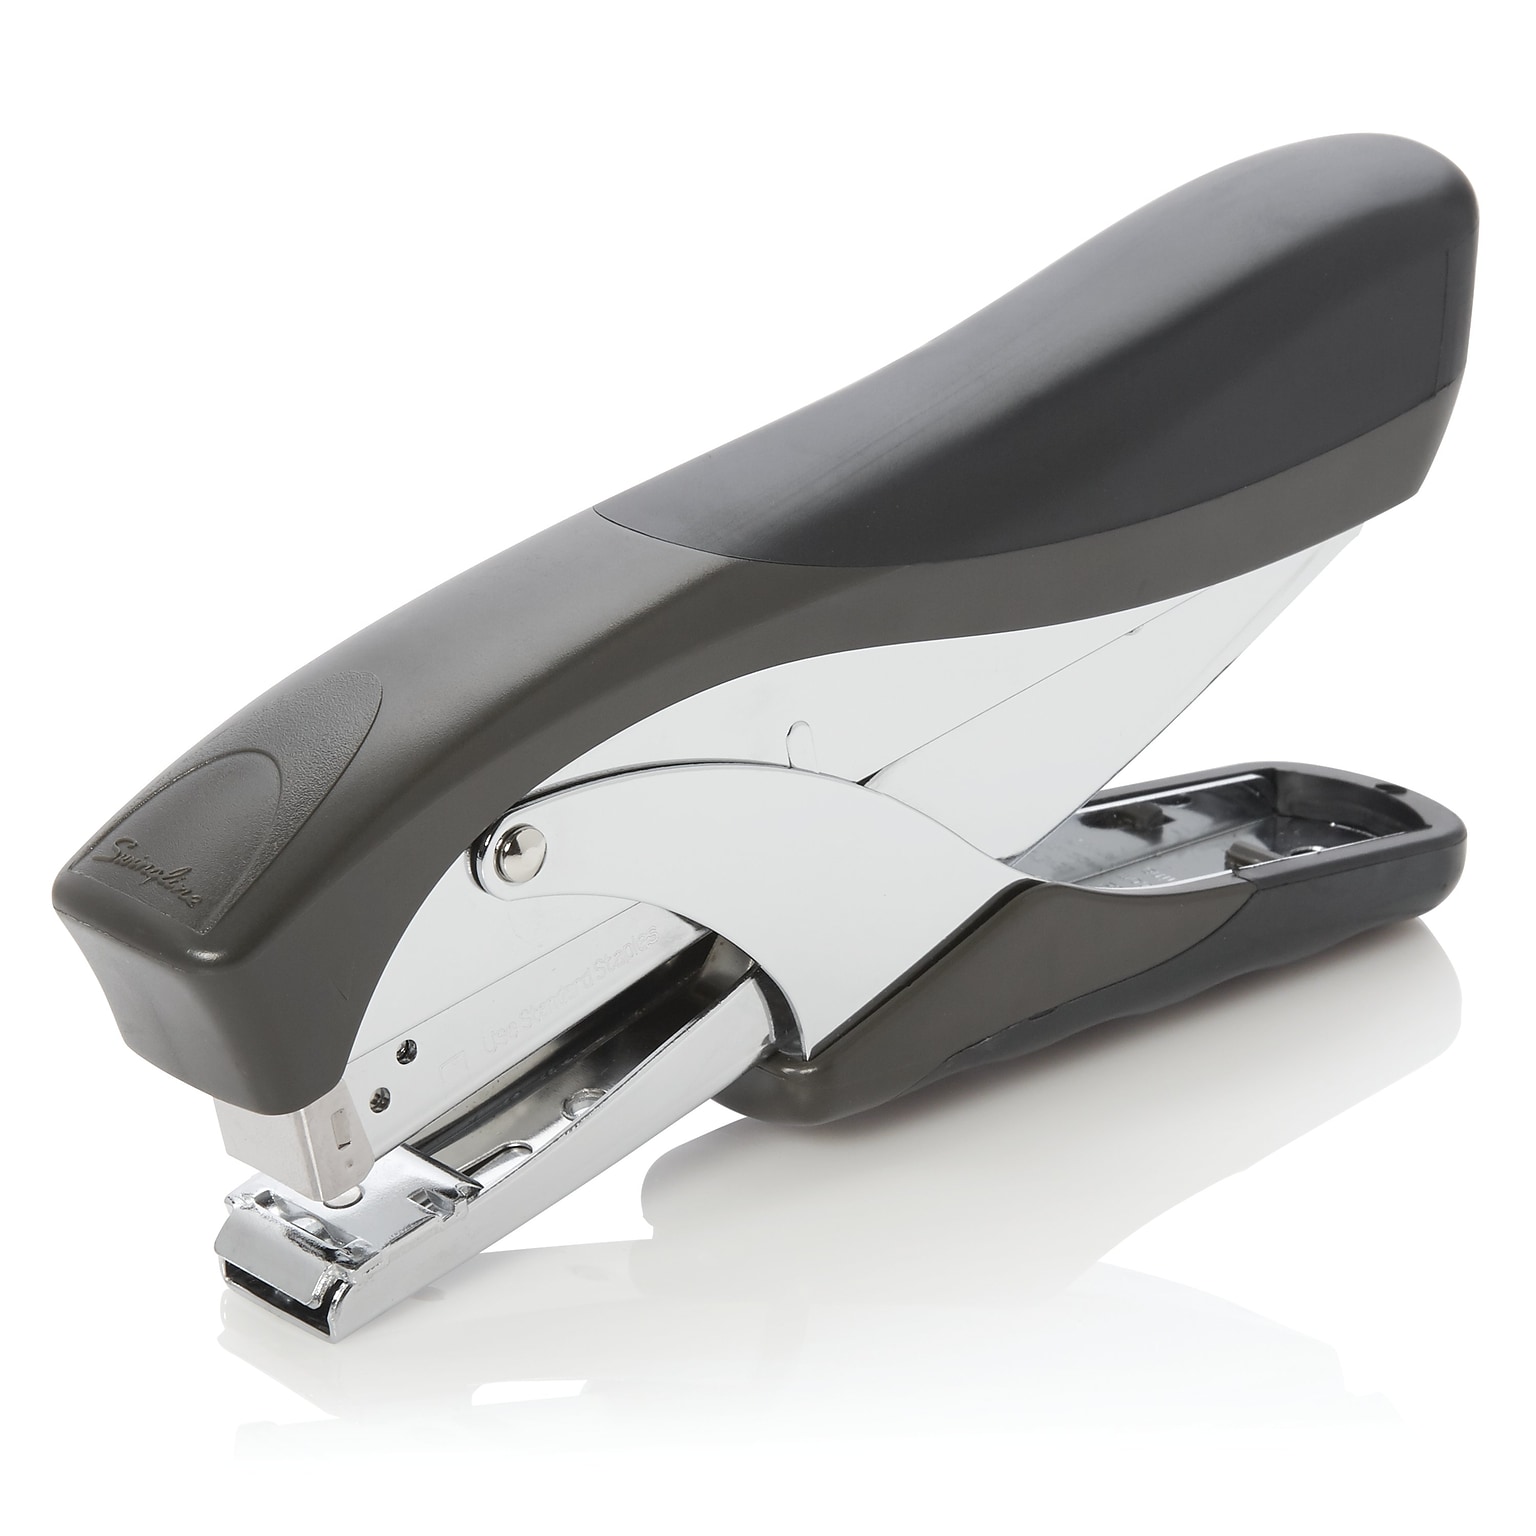 Swingline Premium Soft Grip Hand Stapler, Heavy Use, 20 Sheet Capacity, Black (29950)